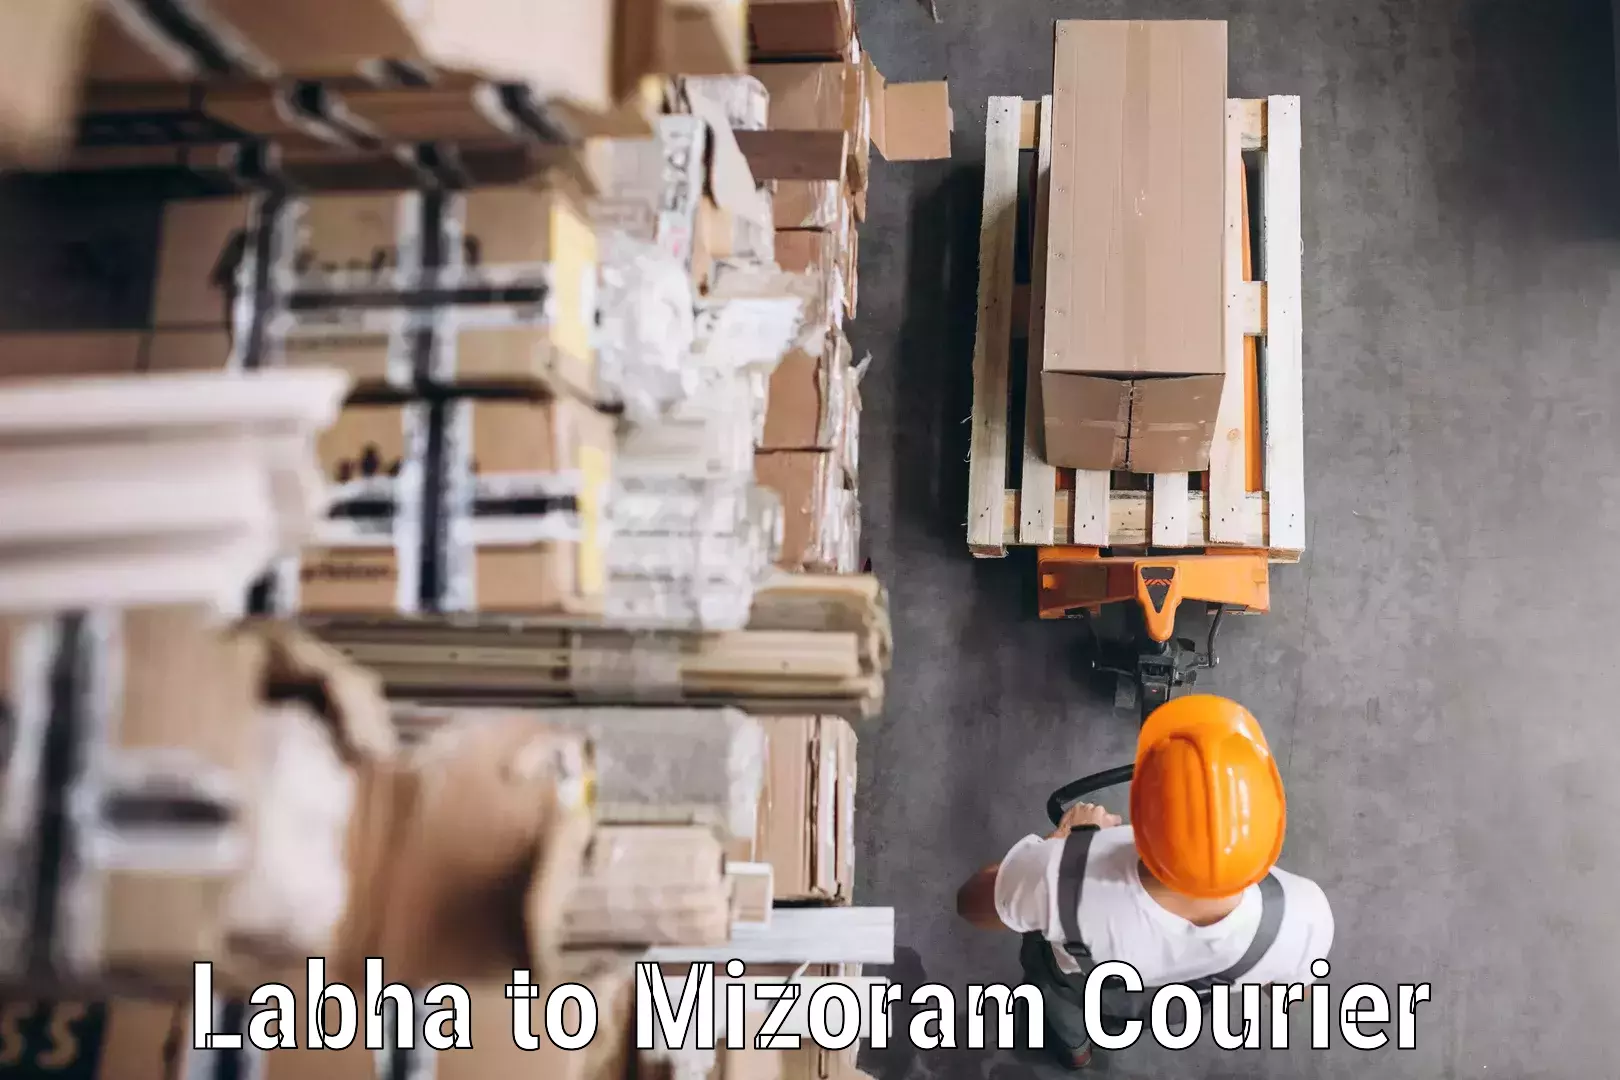 Courier service comparison Labha to Mizoram